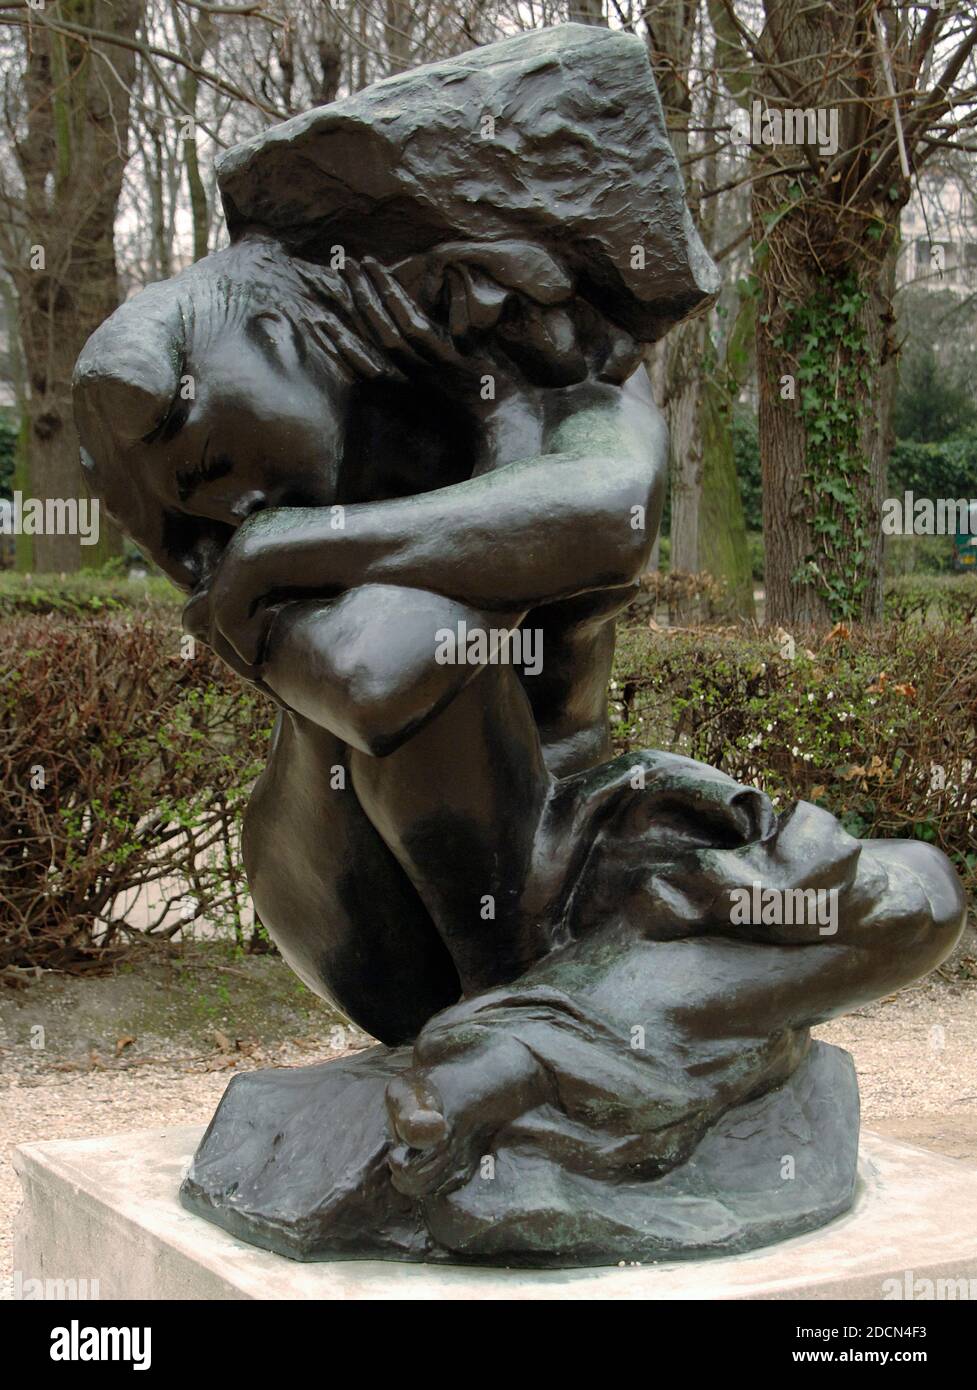 Auguste Rodin (1840-1917). French sculptor. Fallen Caryatid carrying her stone. Bronze. Garden of Sculptures. Rodin Museum. Paris. France. Stock Photo